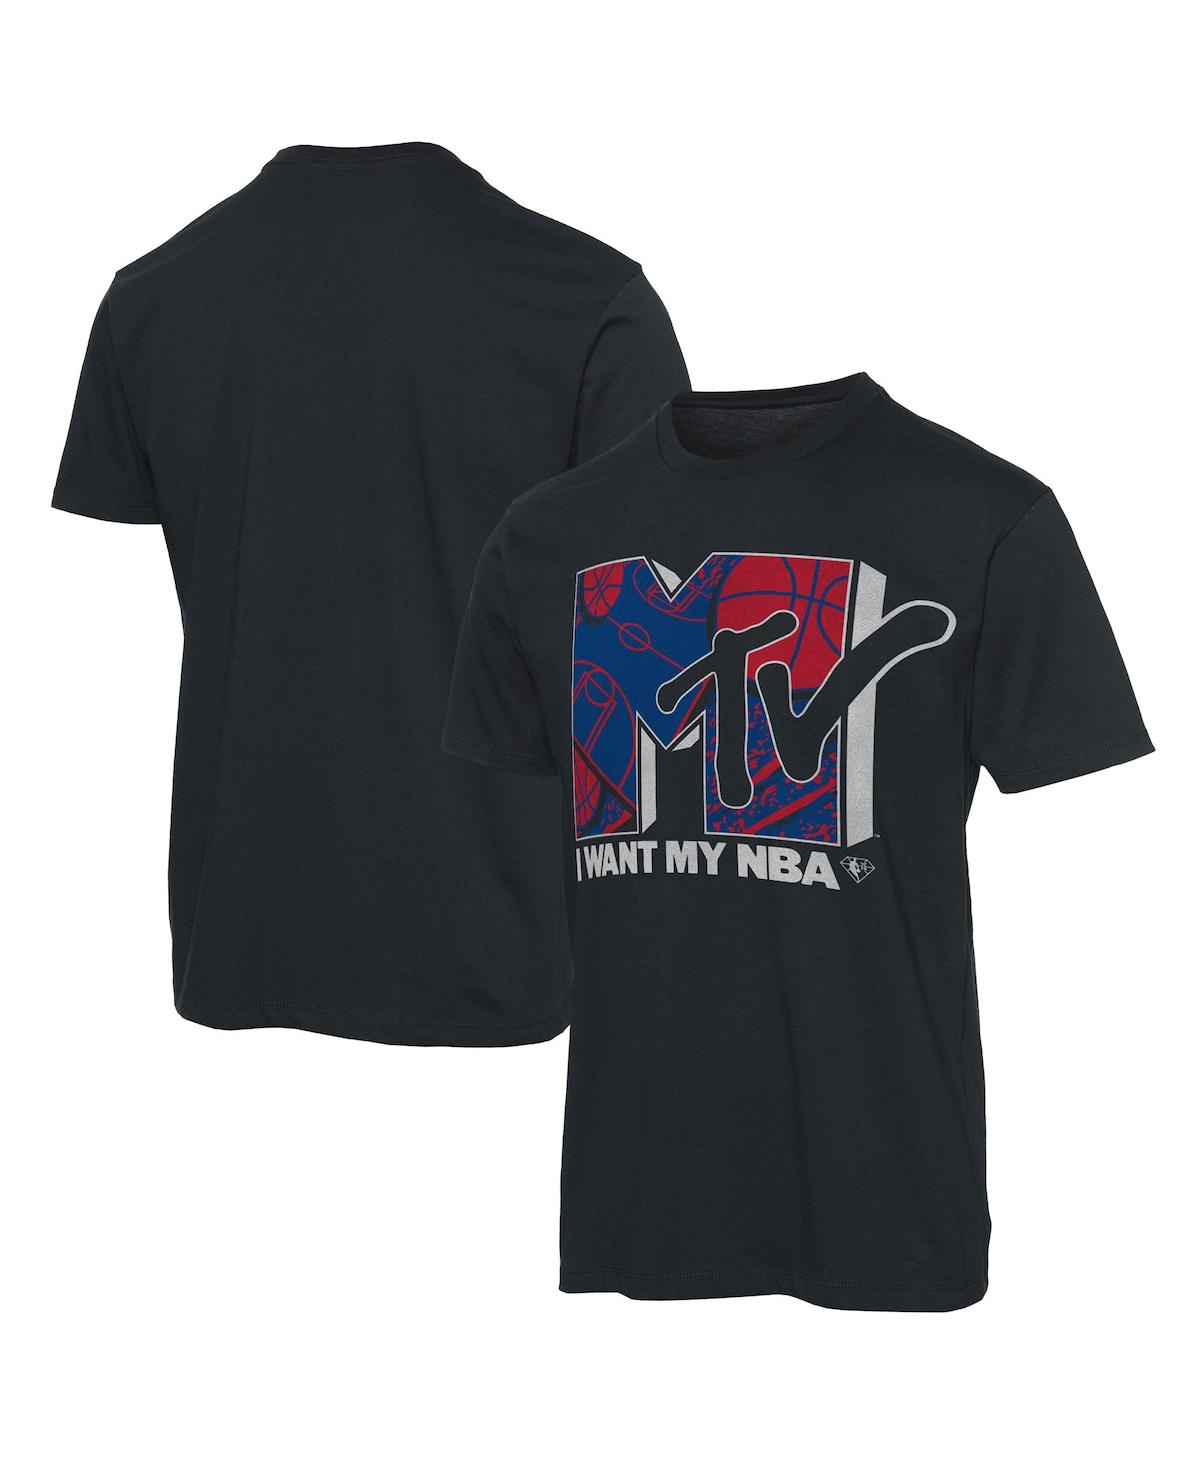 Men's Black Nba x Mtv I Want My T-shirt - Black